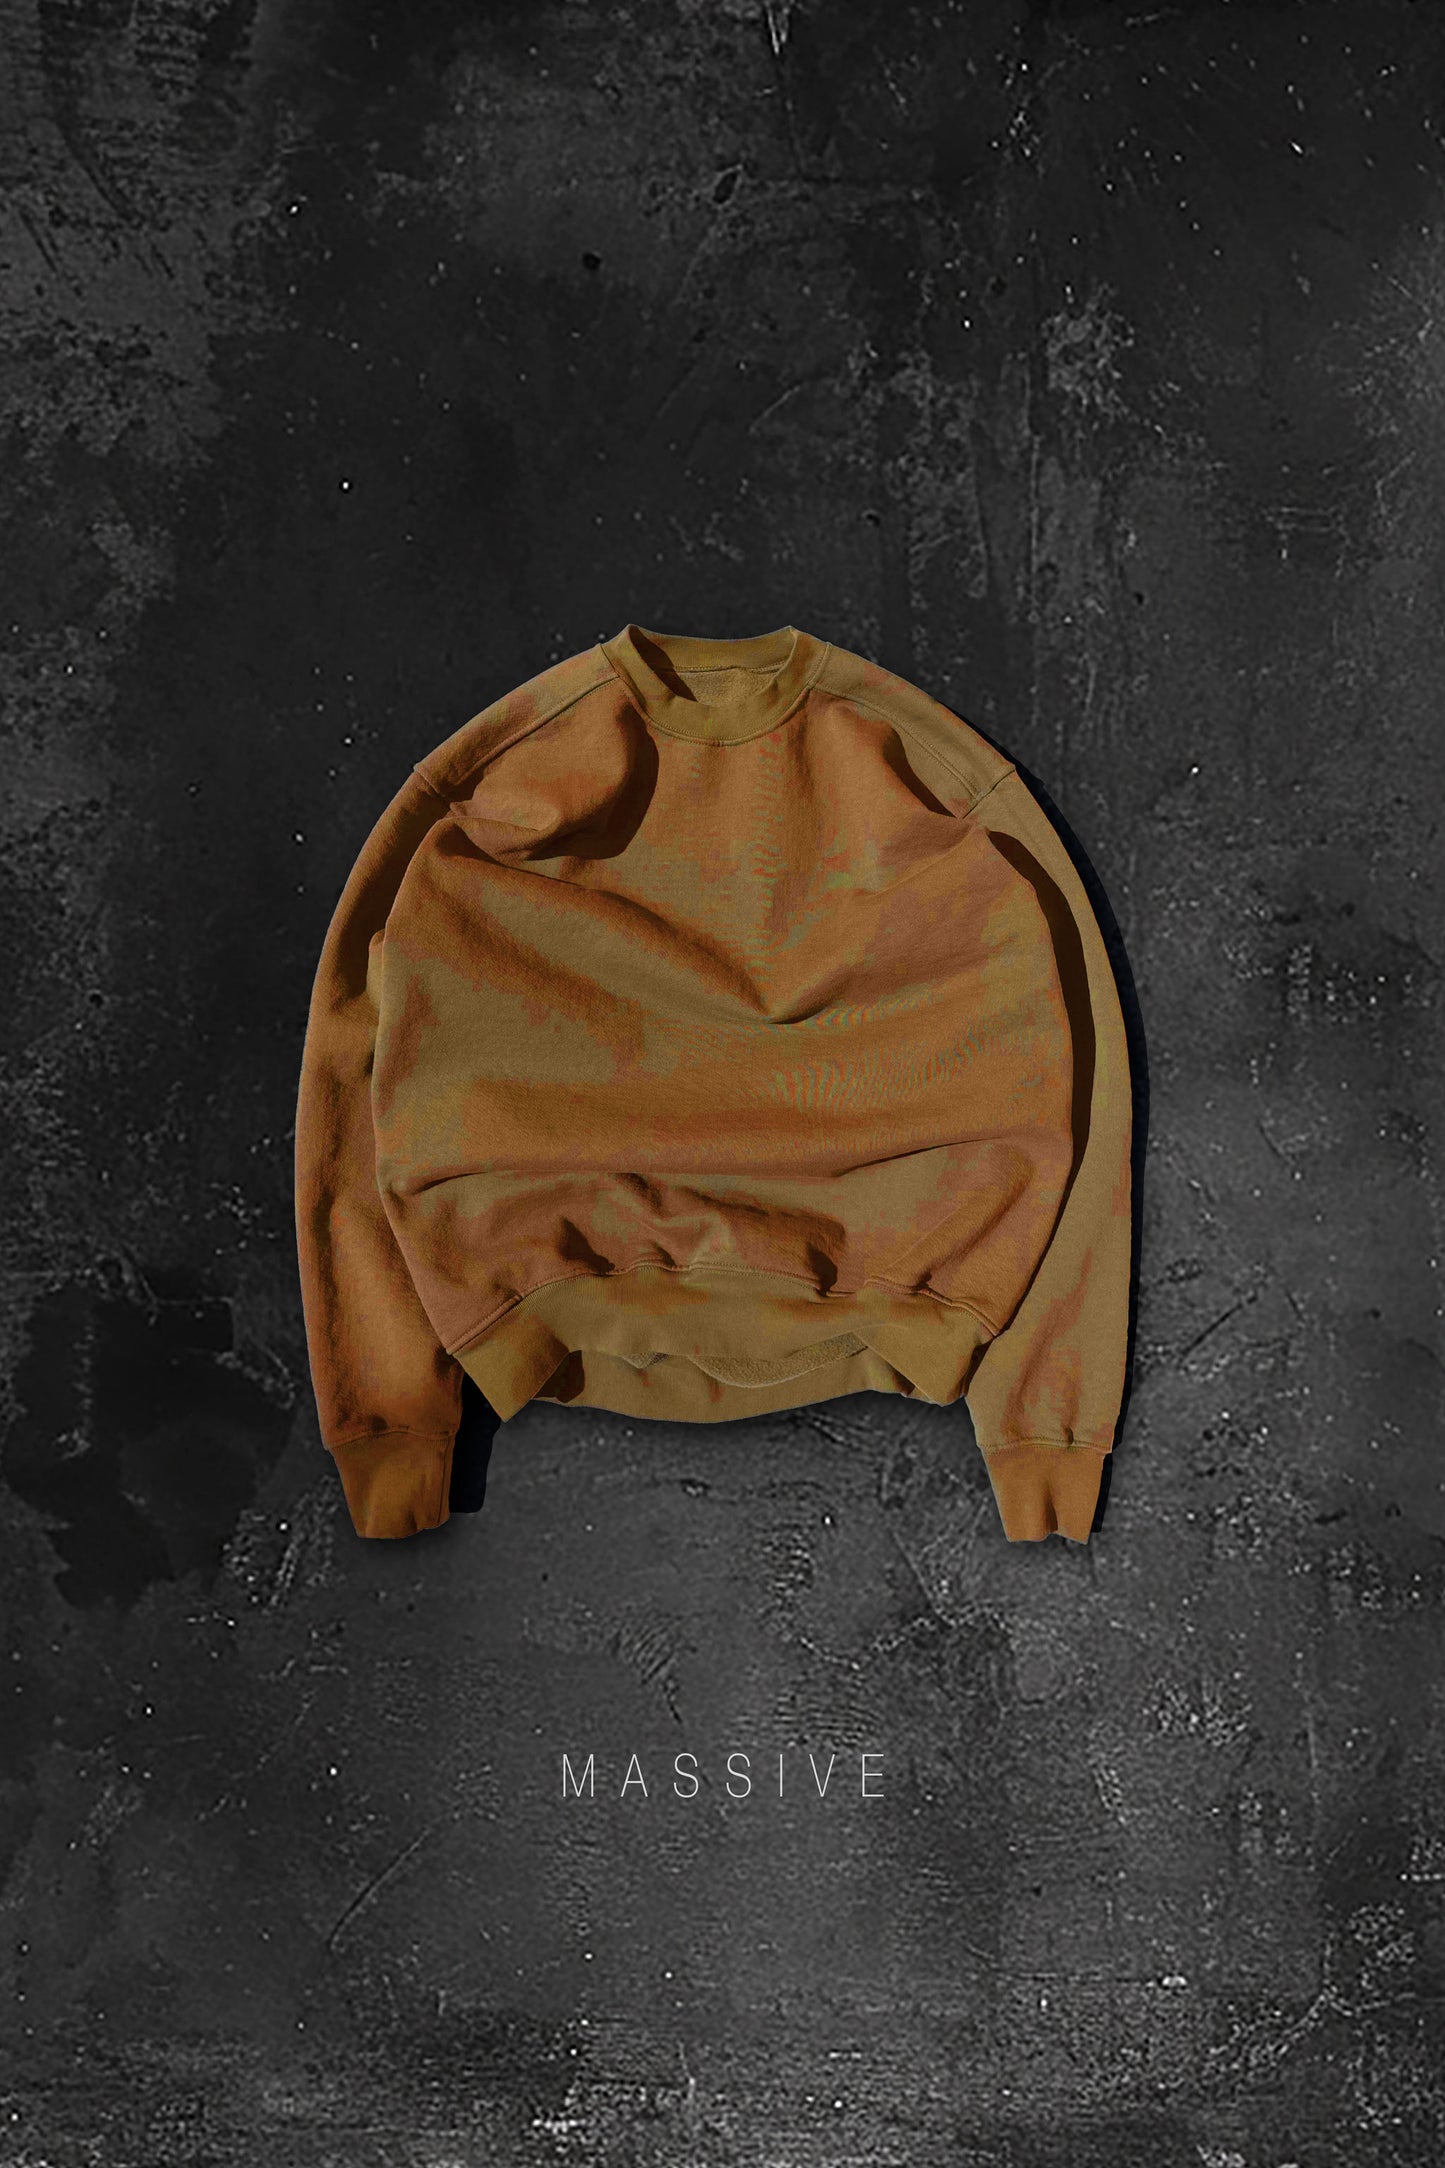 ⭐️ New MASSIVE Sweatshirt